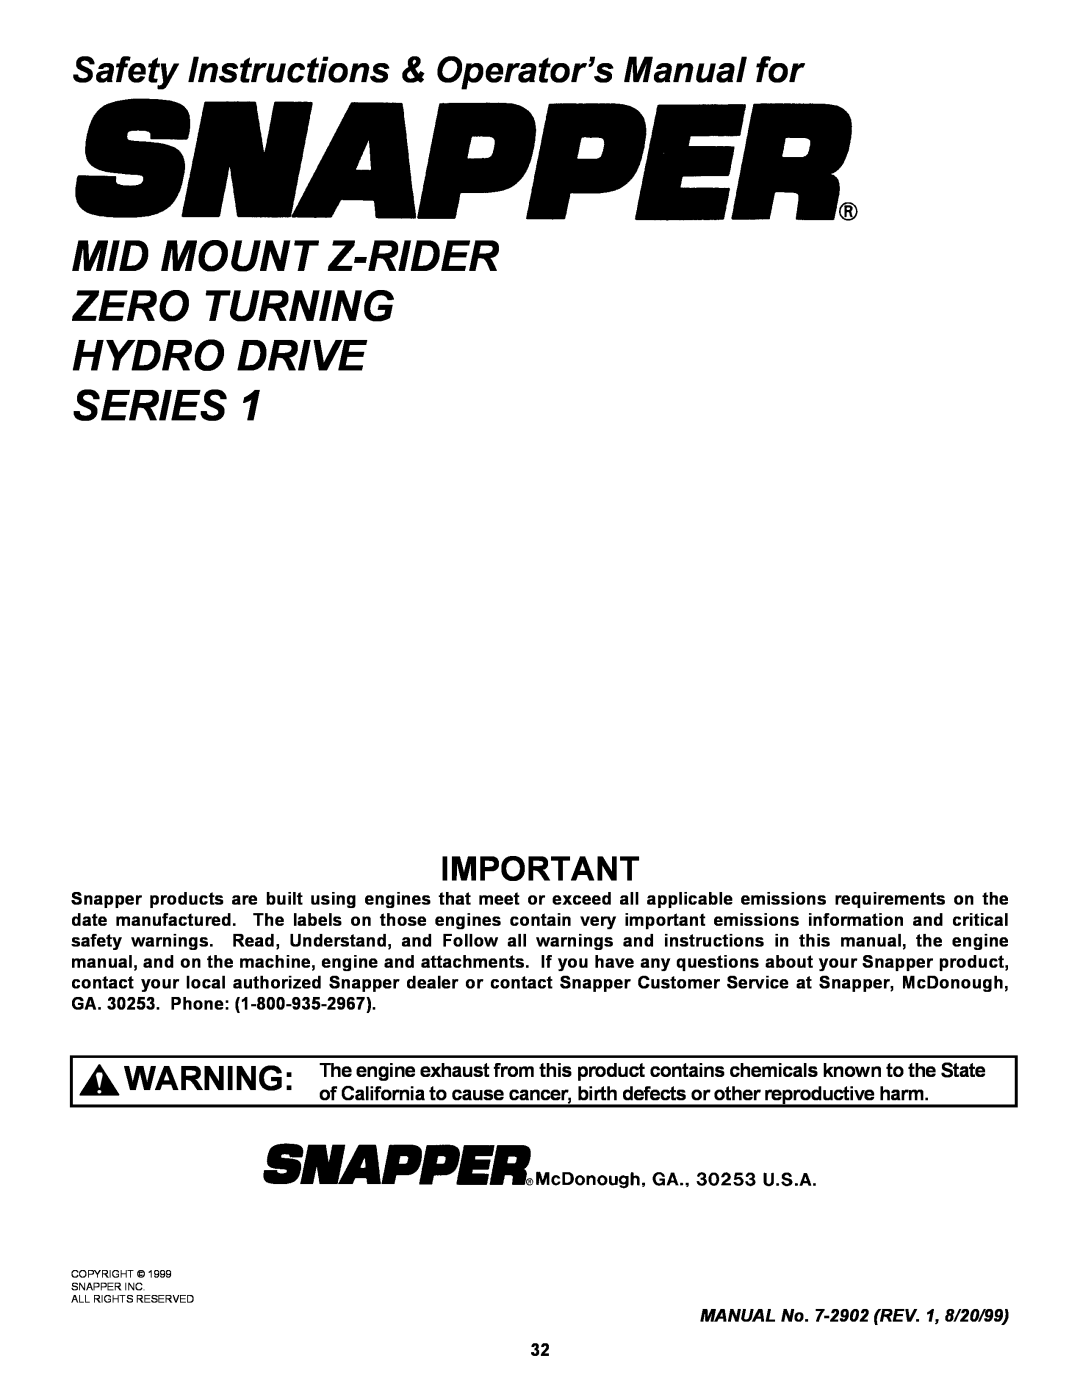 Snapper ZM5200M, ZM2501KH, ZM6100M Mid Mount Z-Rider Zero Turning Hydro Drive Series, MANUAL No. 7-2902 REV. 1, 8/20/99 